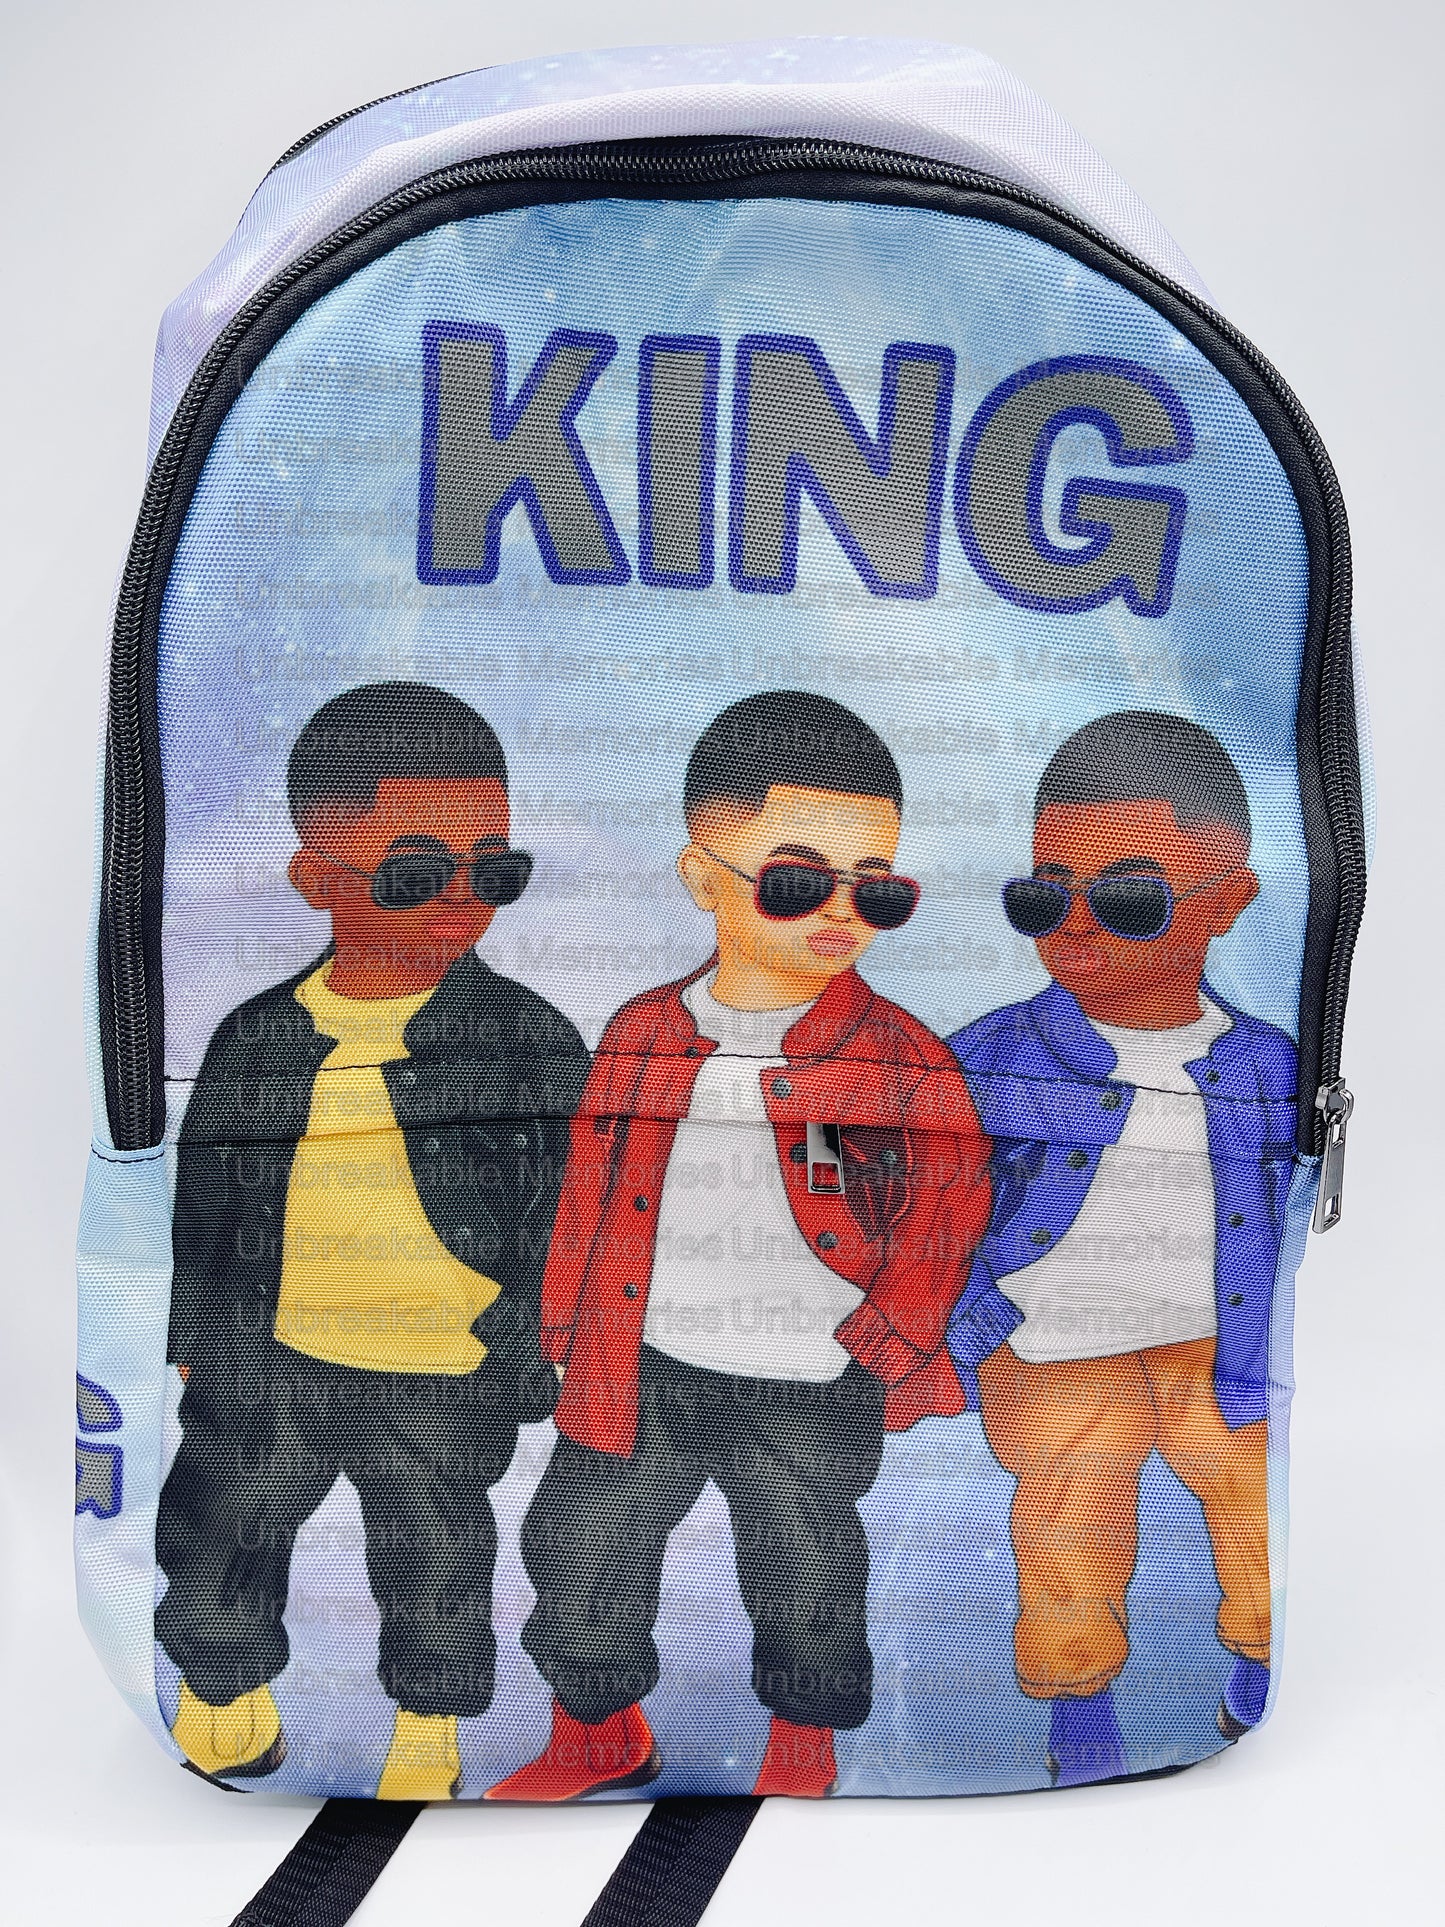 King Backpack